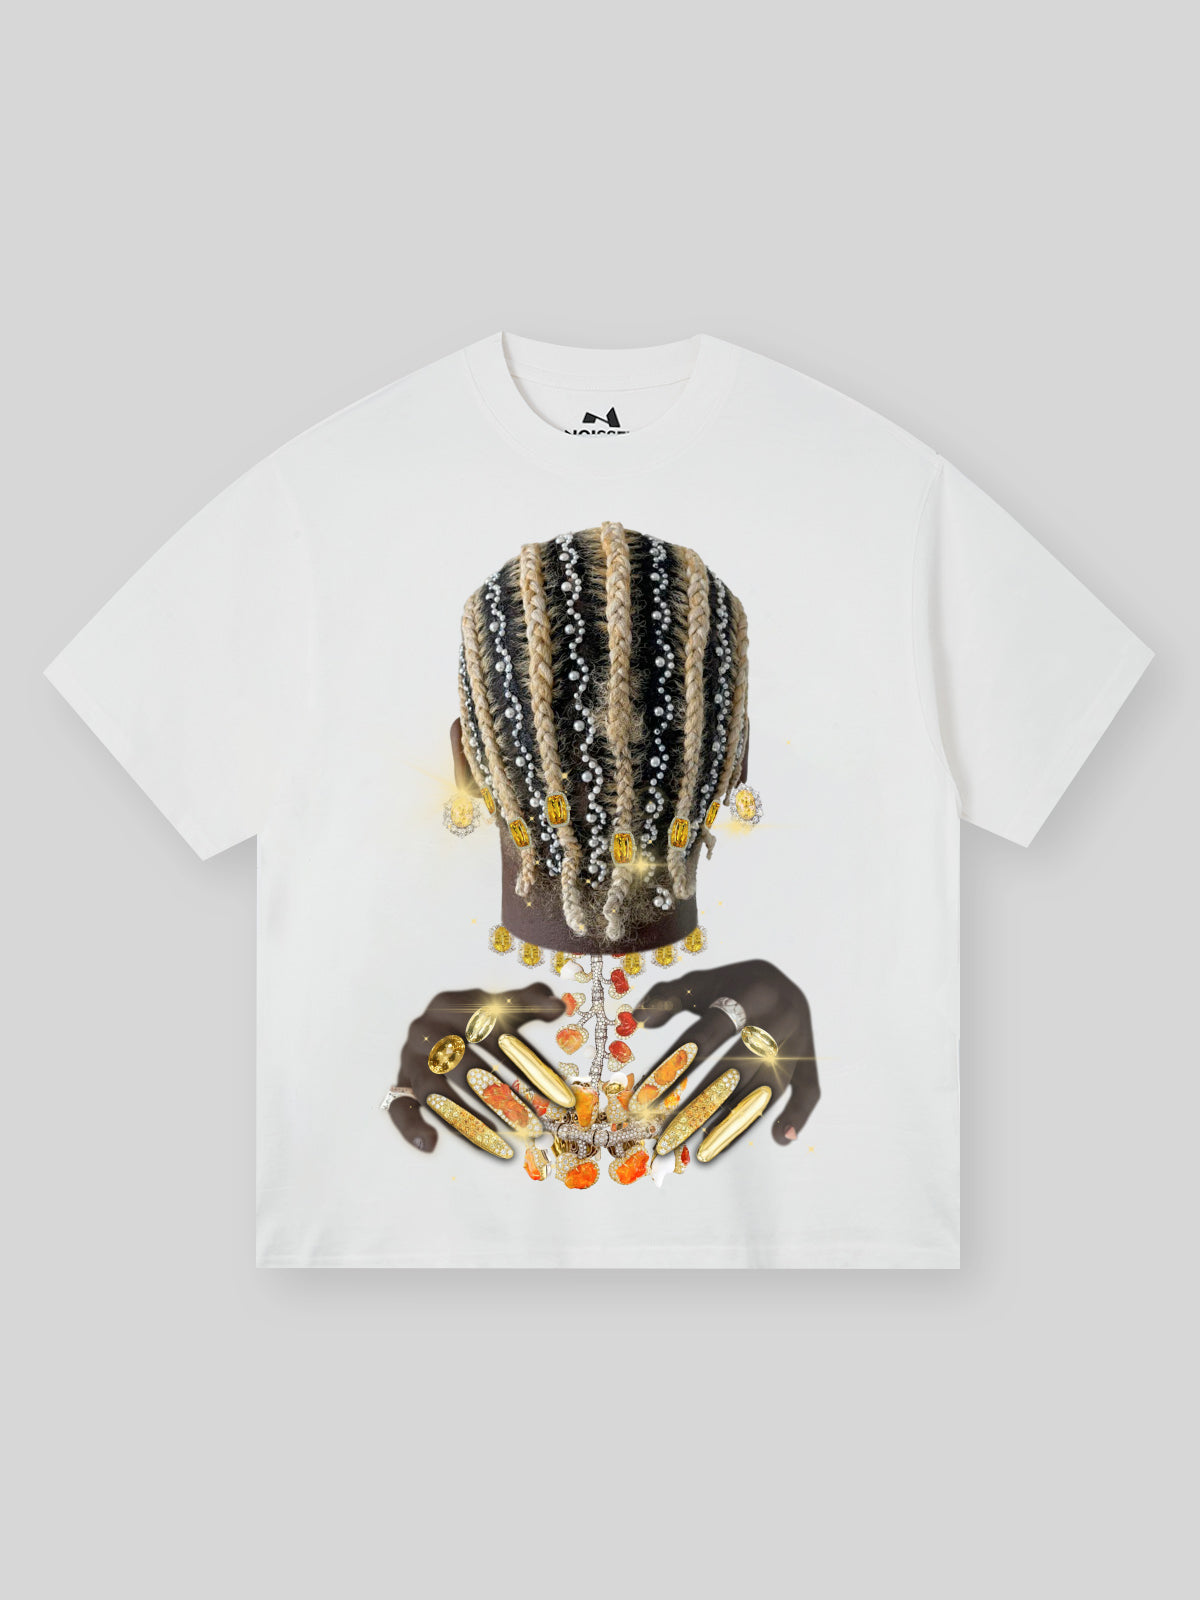 BOUNCE BACK© Gold Diamond Braid and Diamond Print T-shirt